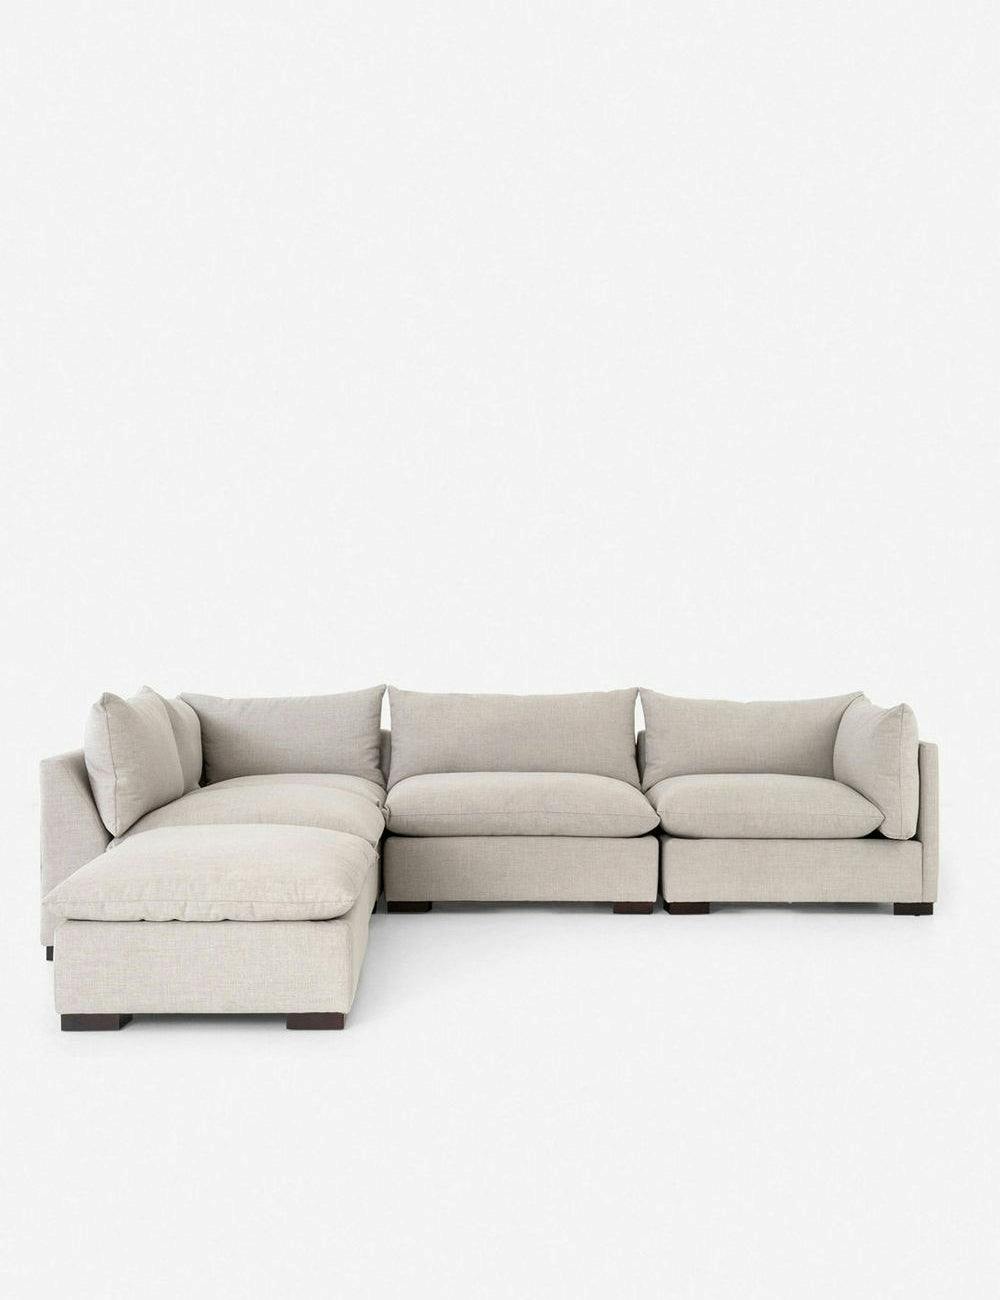 Mitzi 5-Piece Modular Sectional Sofa with Ottoman